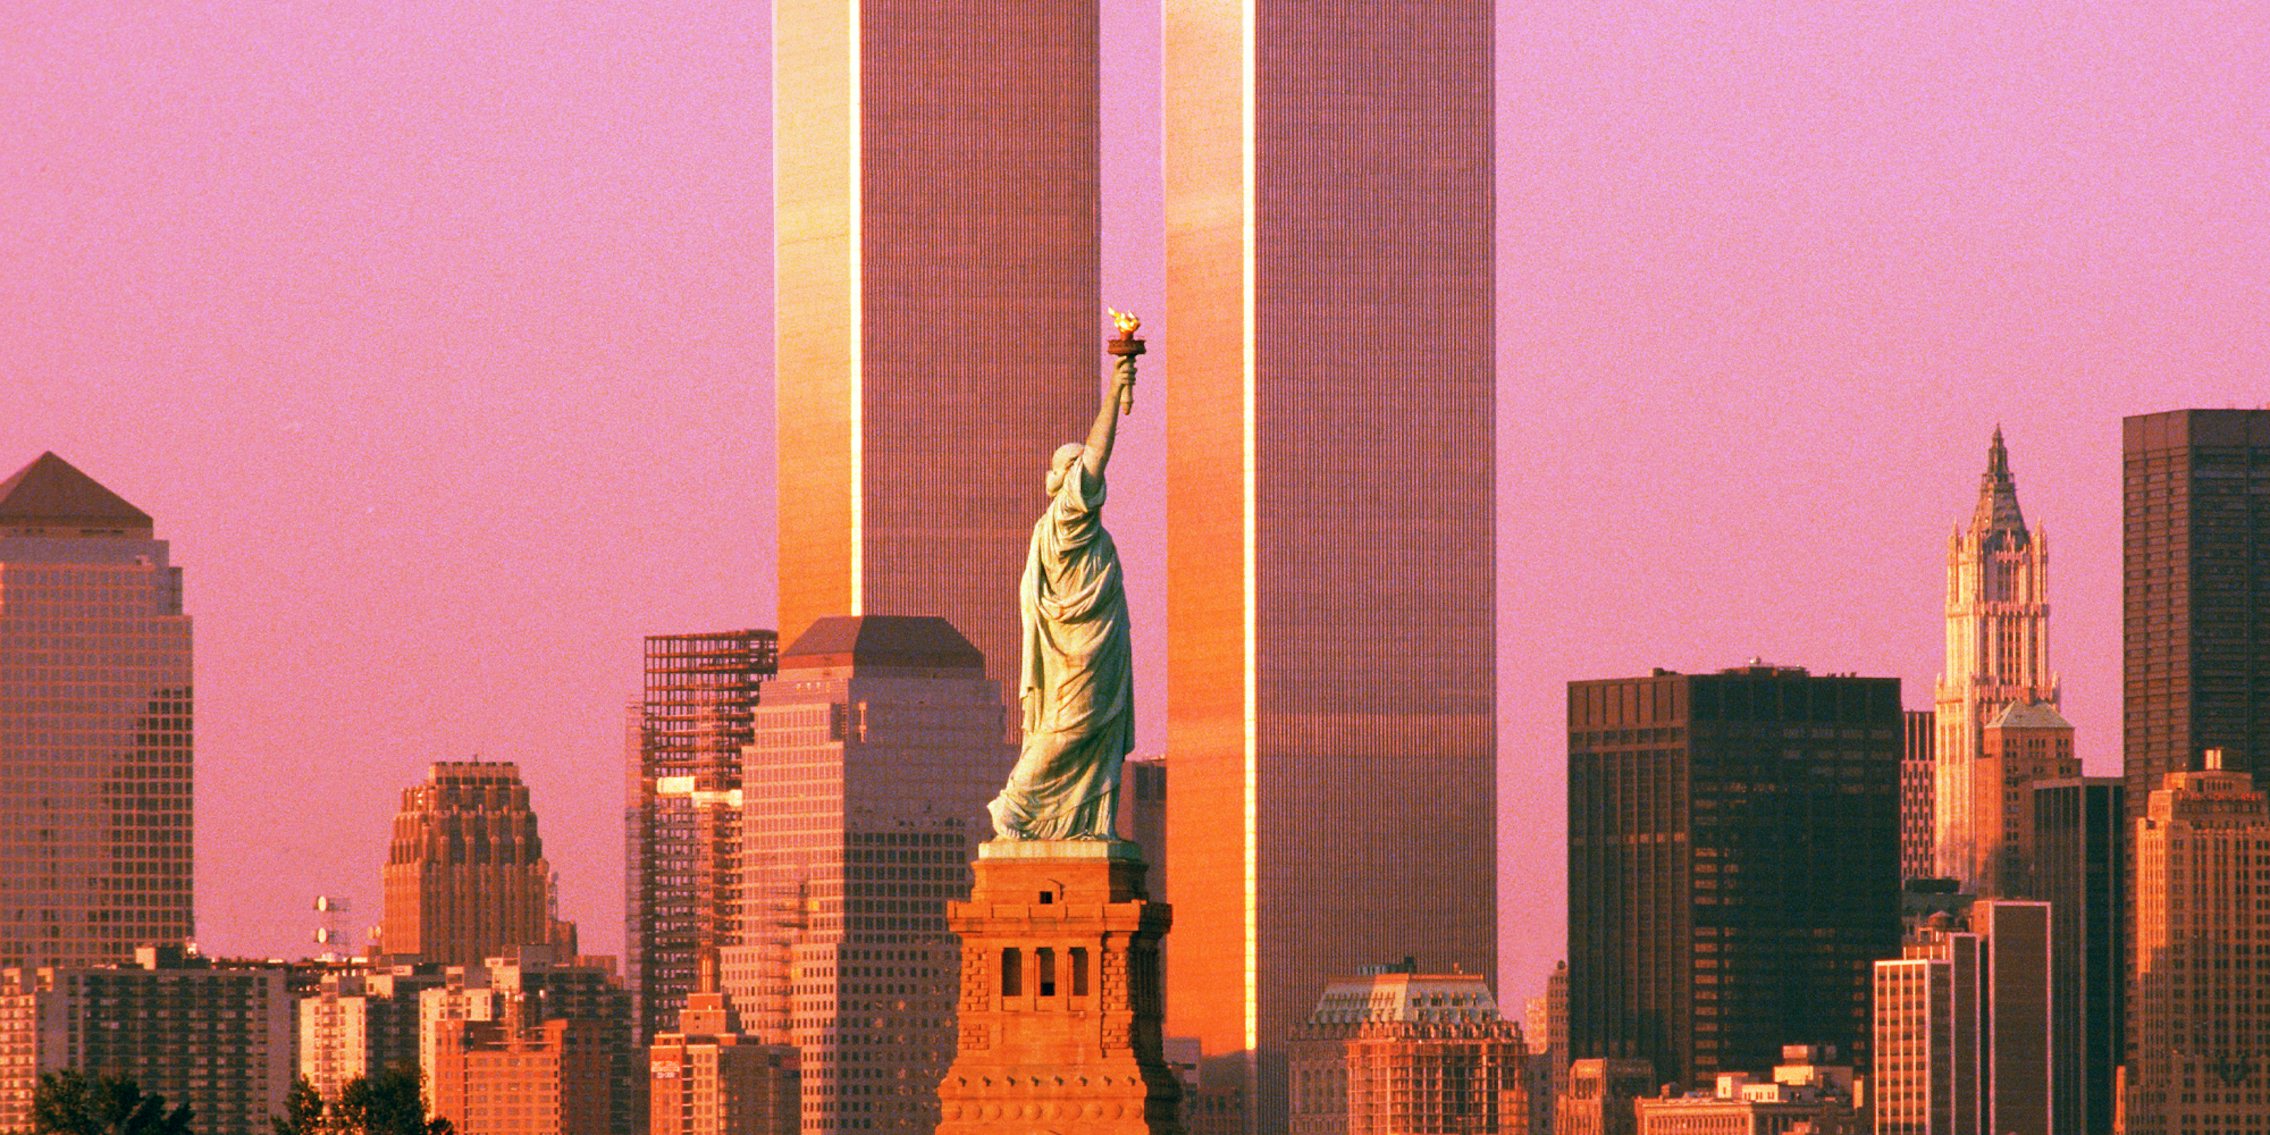 World Trade Center with sunset sky vivek Ramaswamy 9/11